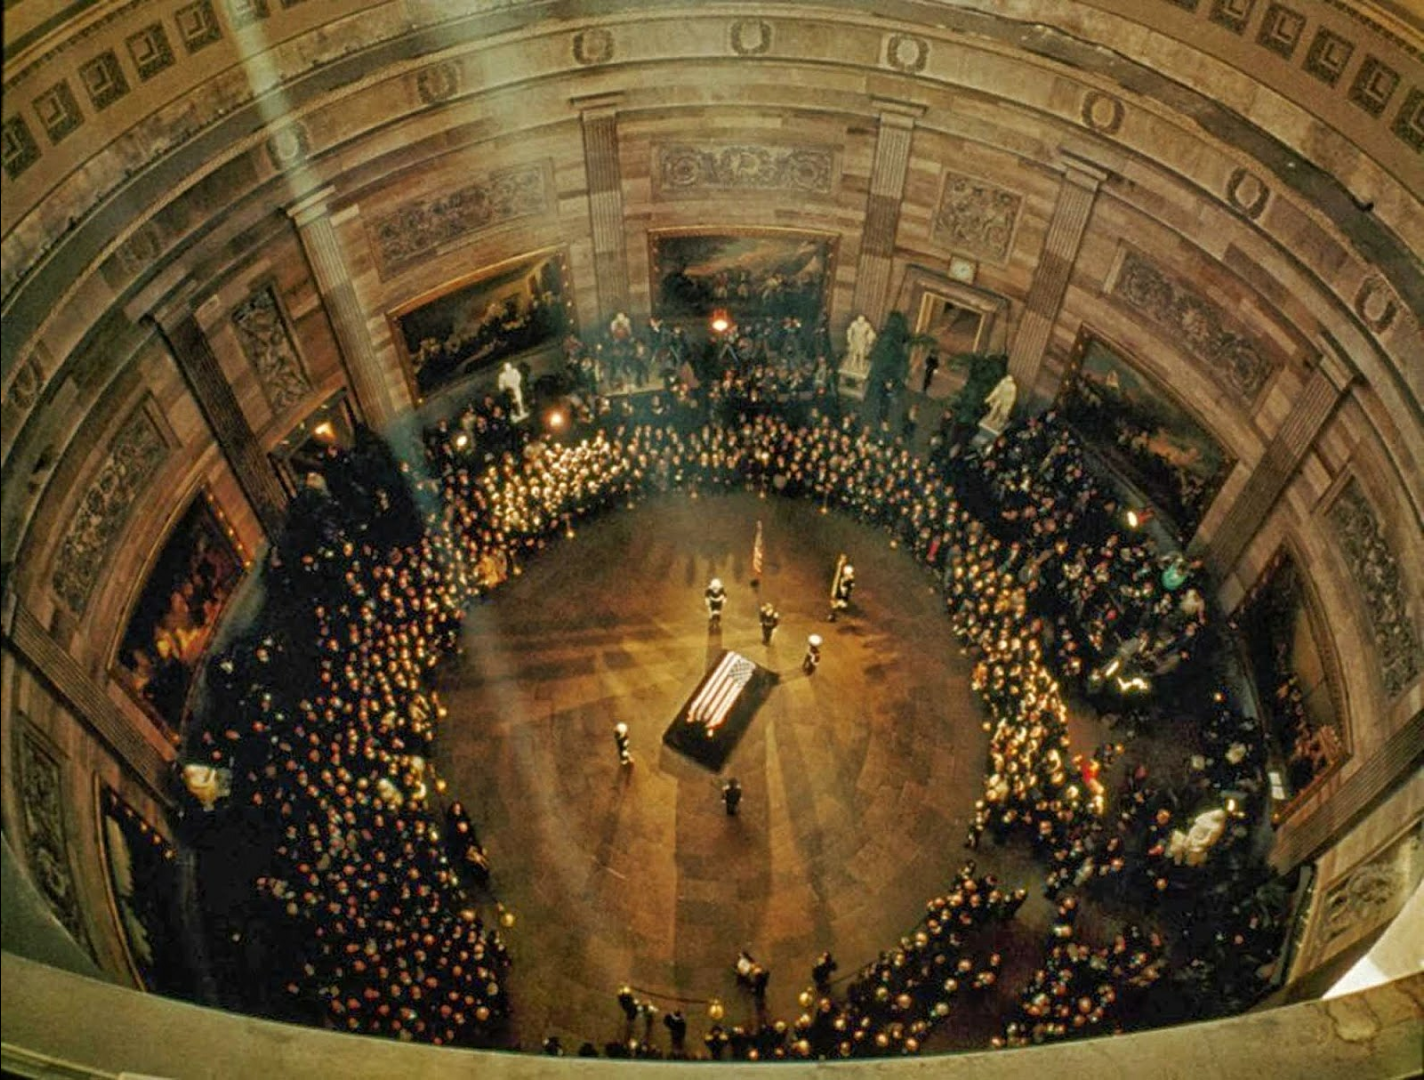 JFK’s funeral at the capital. November 1963